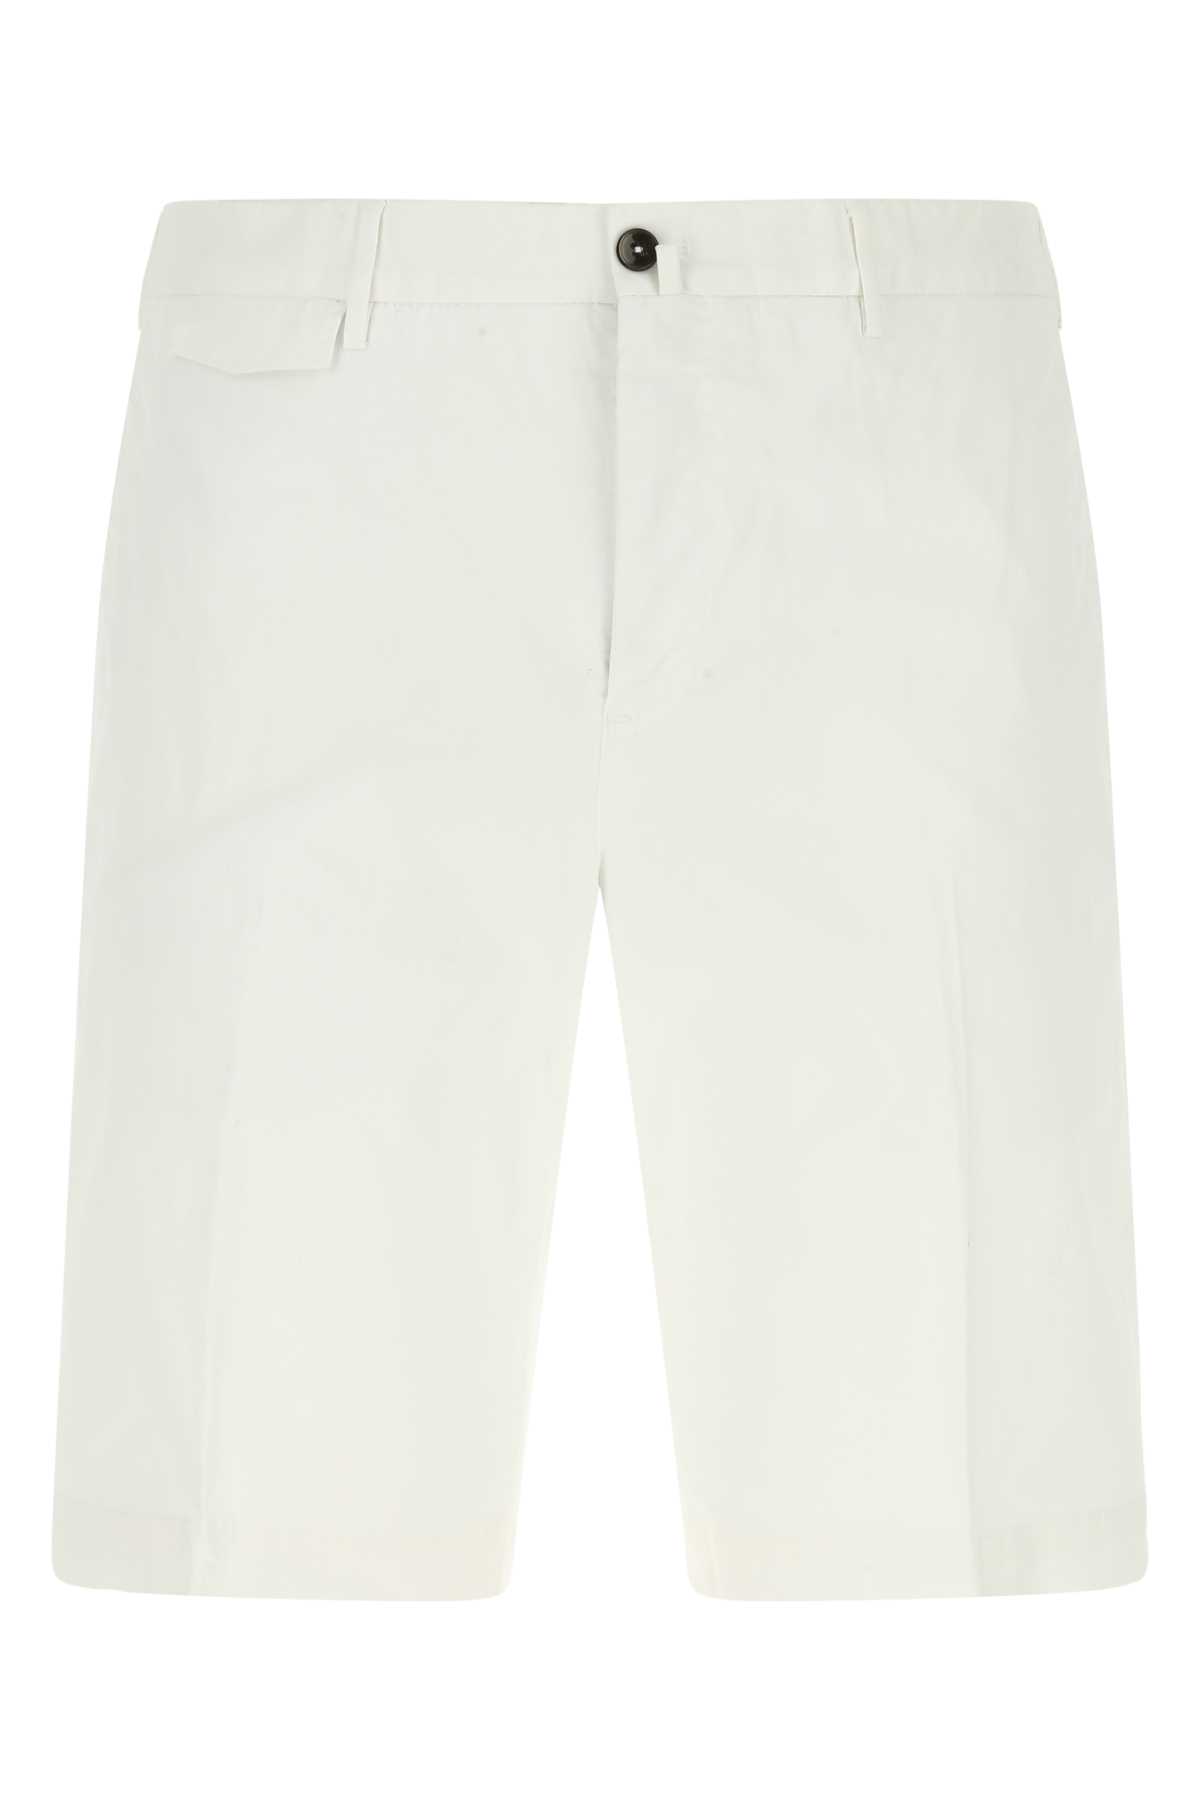 White Stretch Cotton Bermuda Shorts